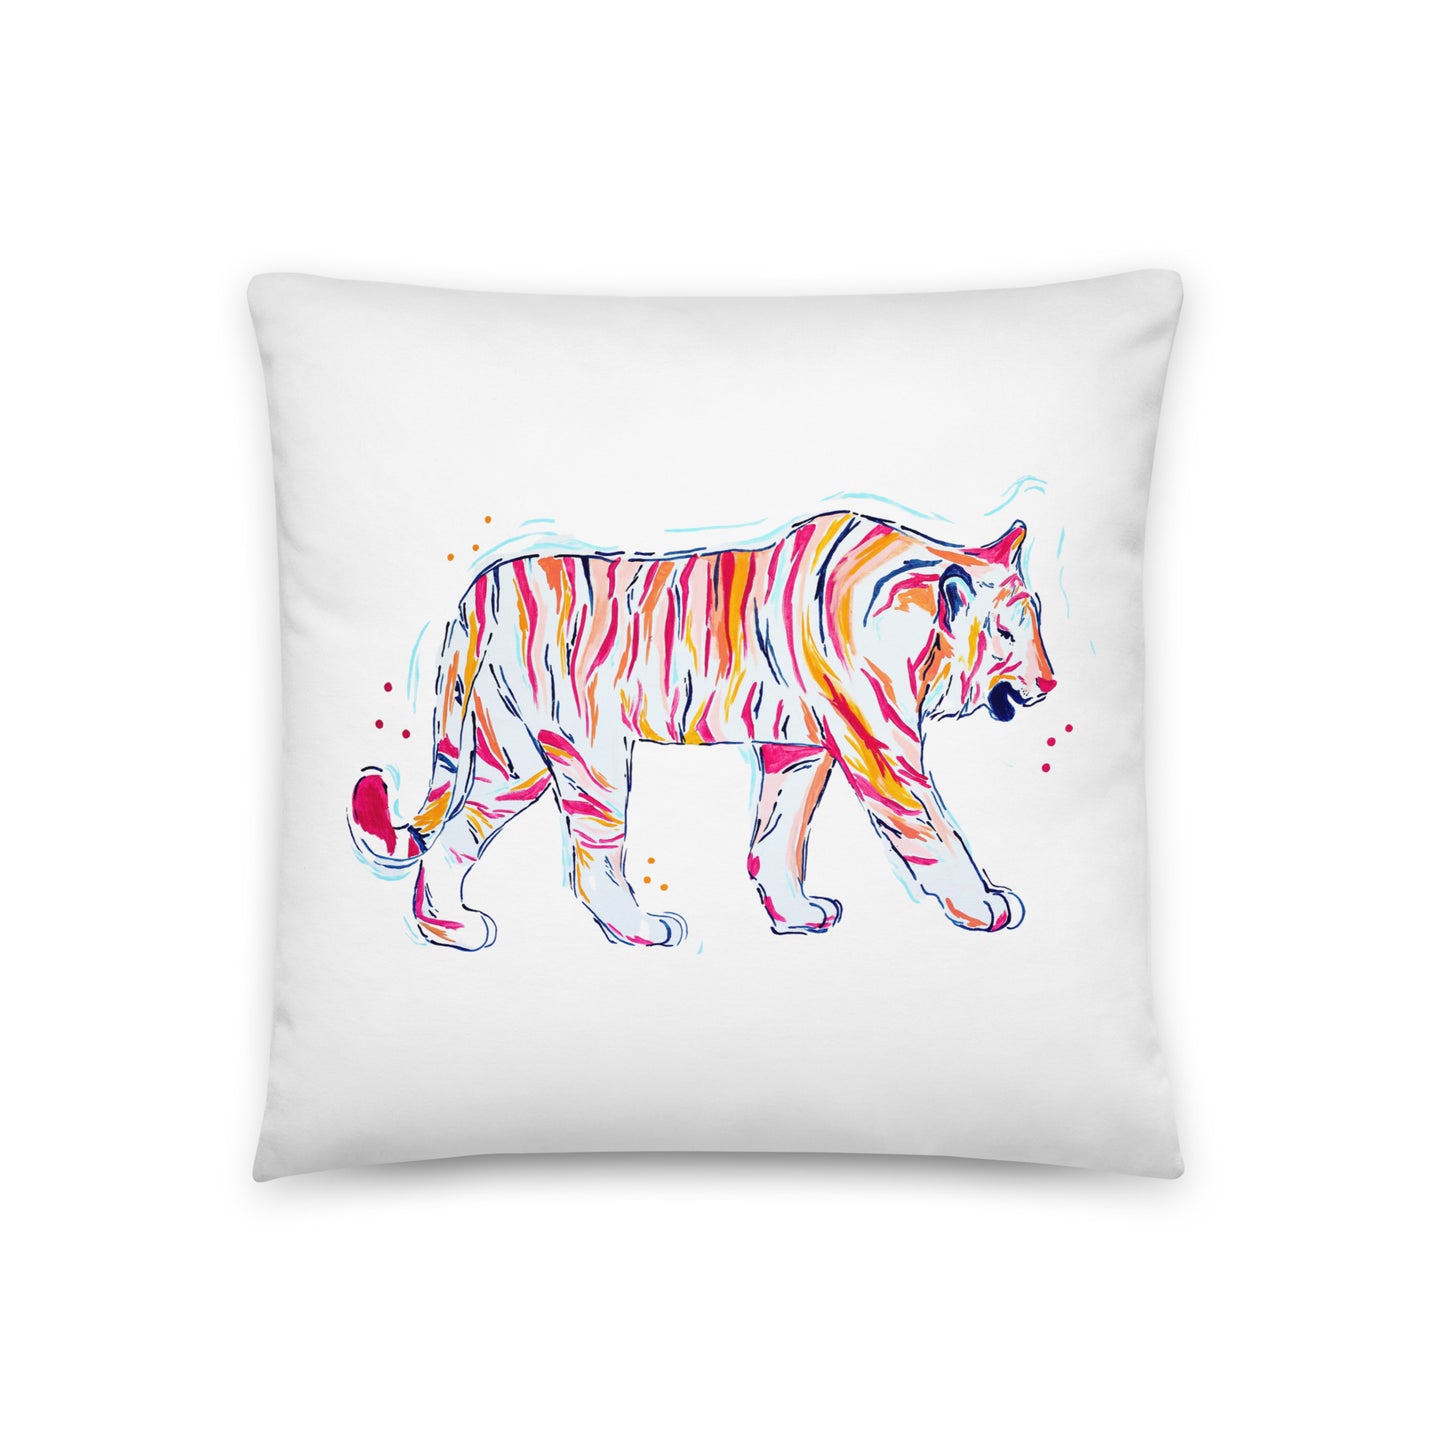 Tiger's Dream Pillow